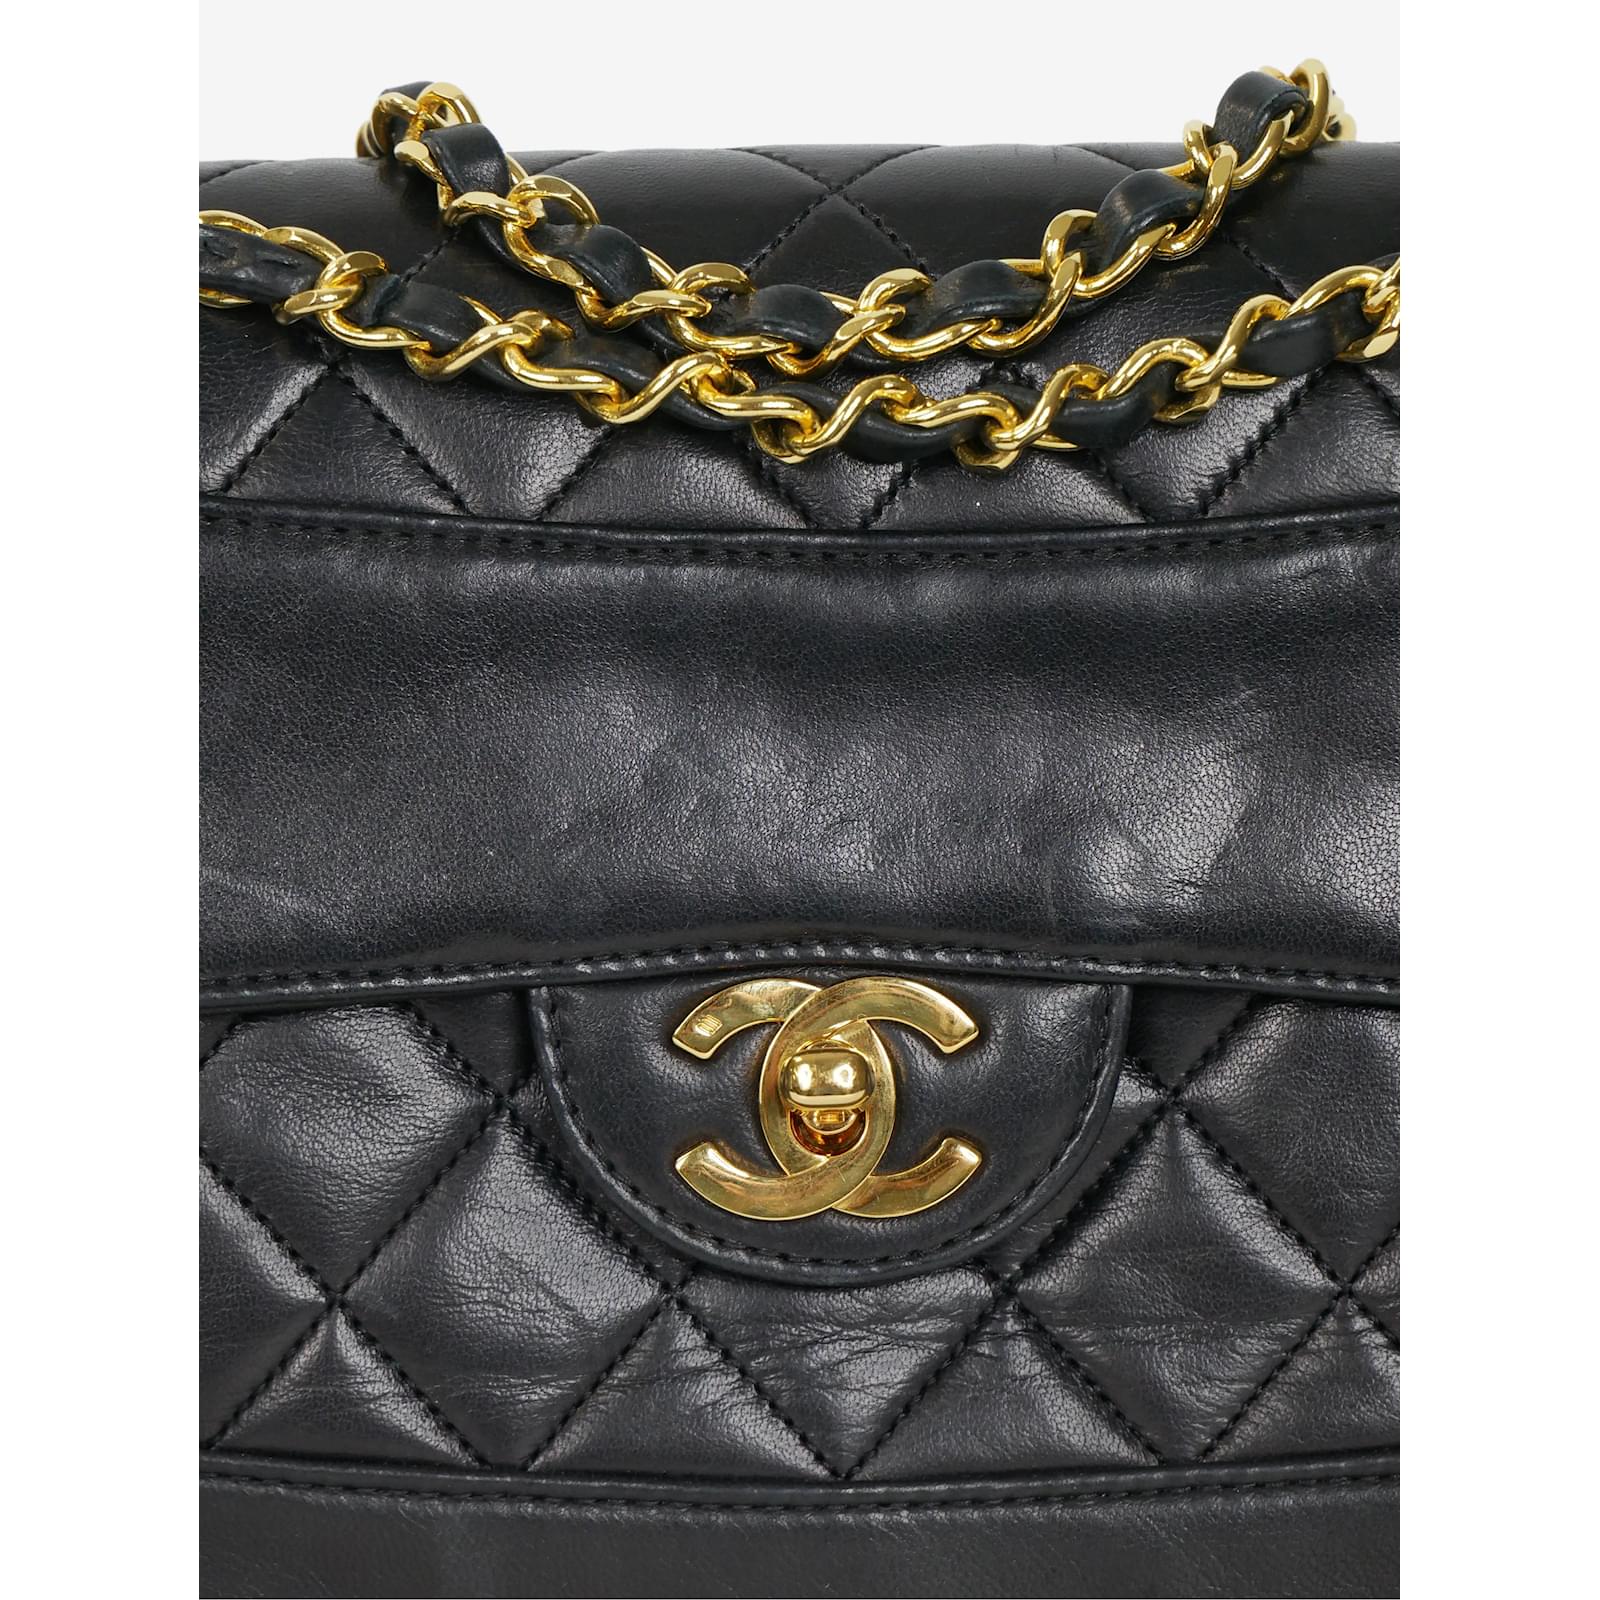 Chanel Black lambskin vintage 1989-1991 gold hardware single flap